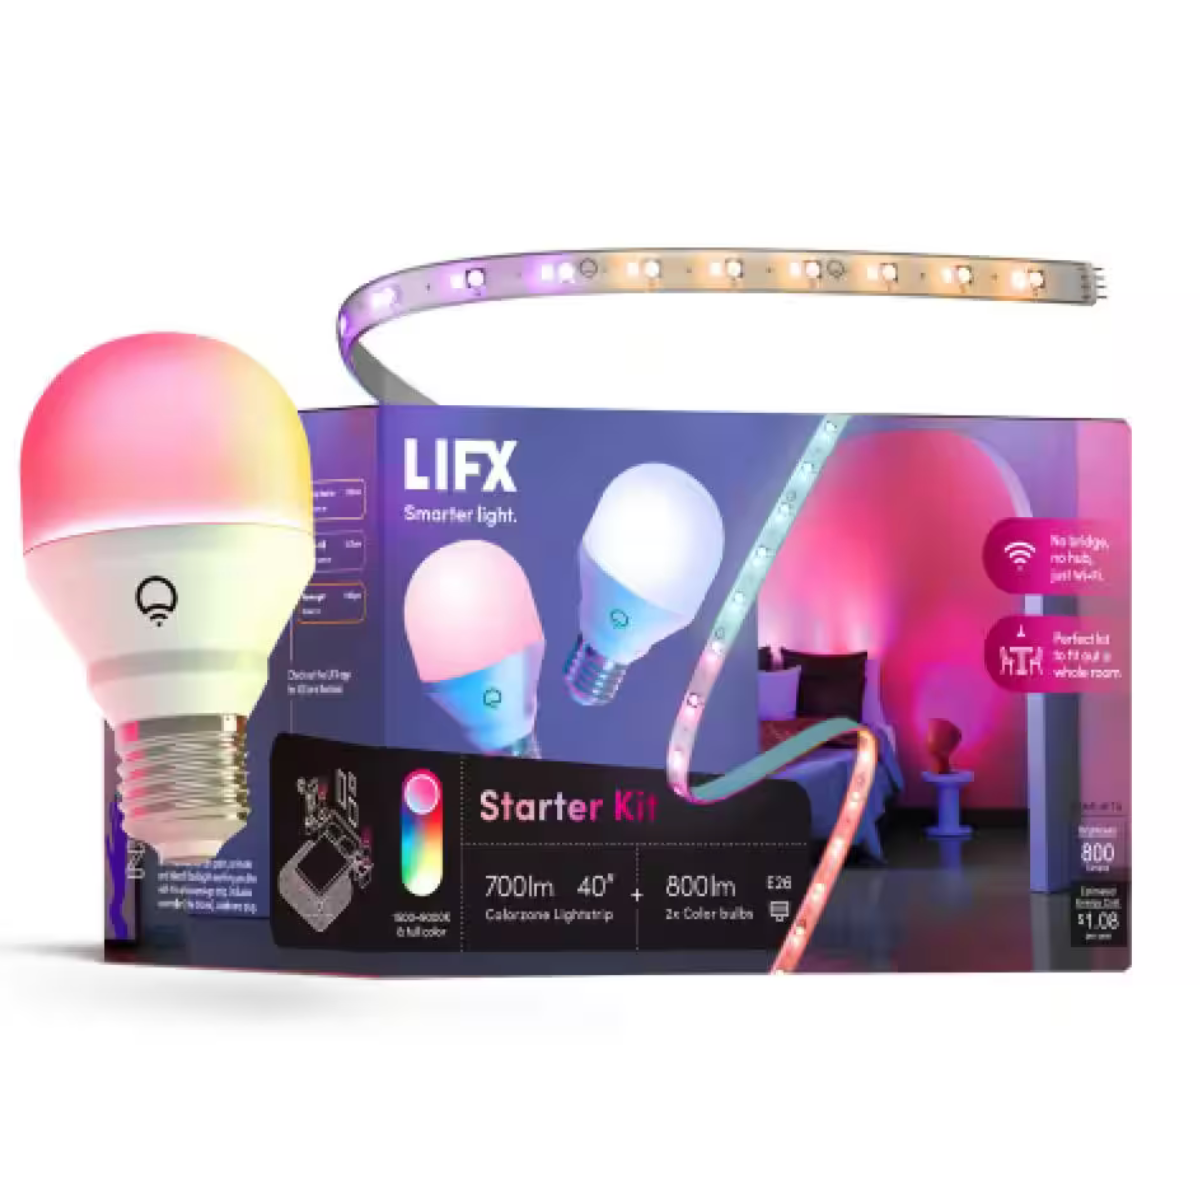 The LIFX Starter Kit